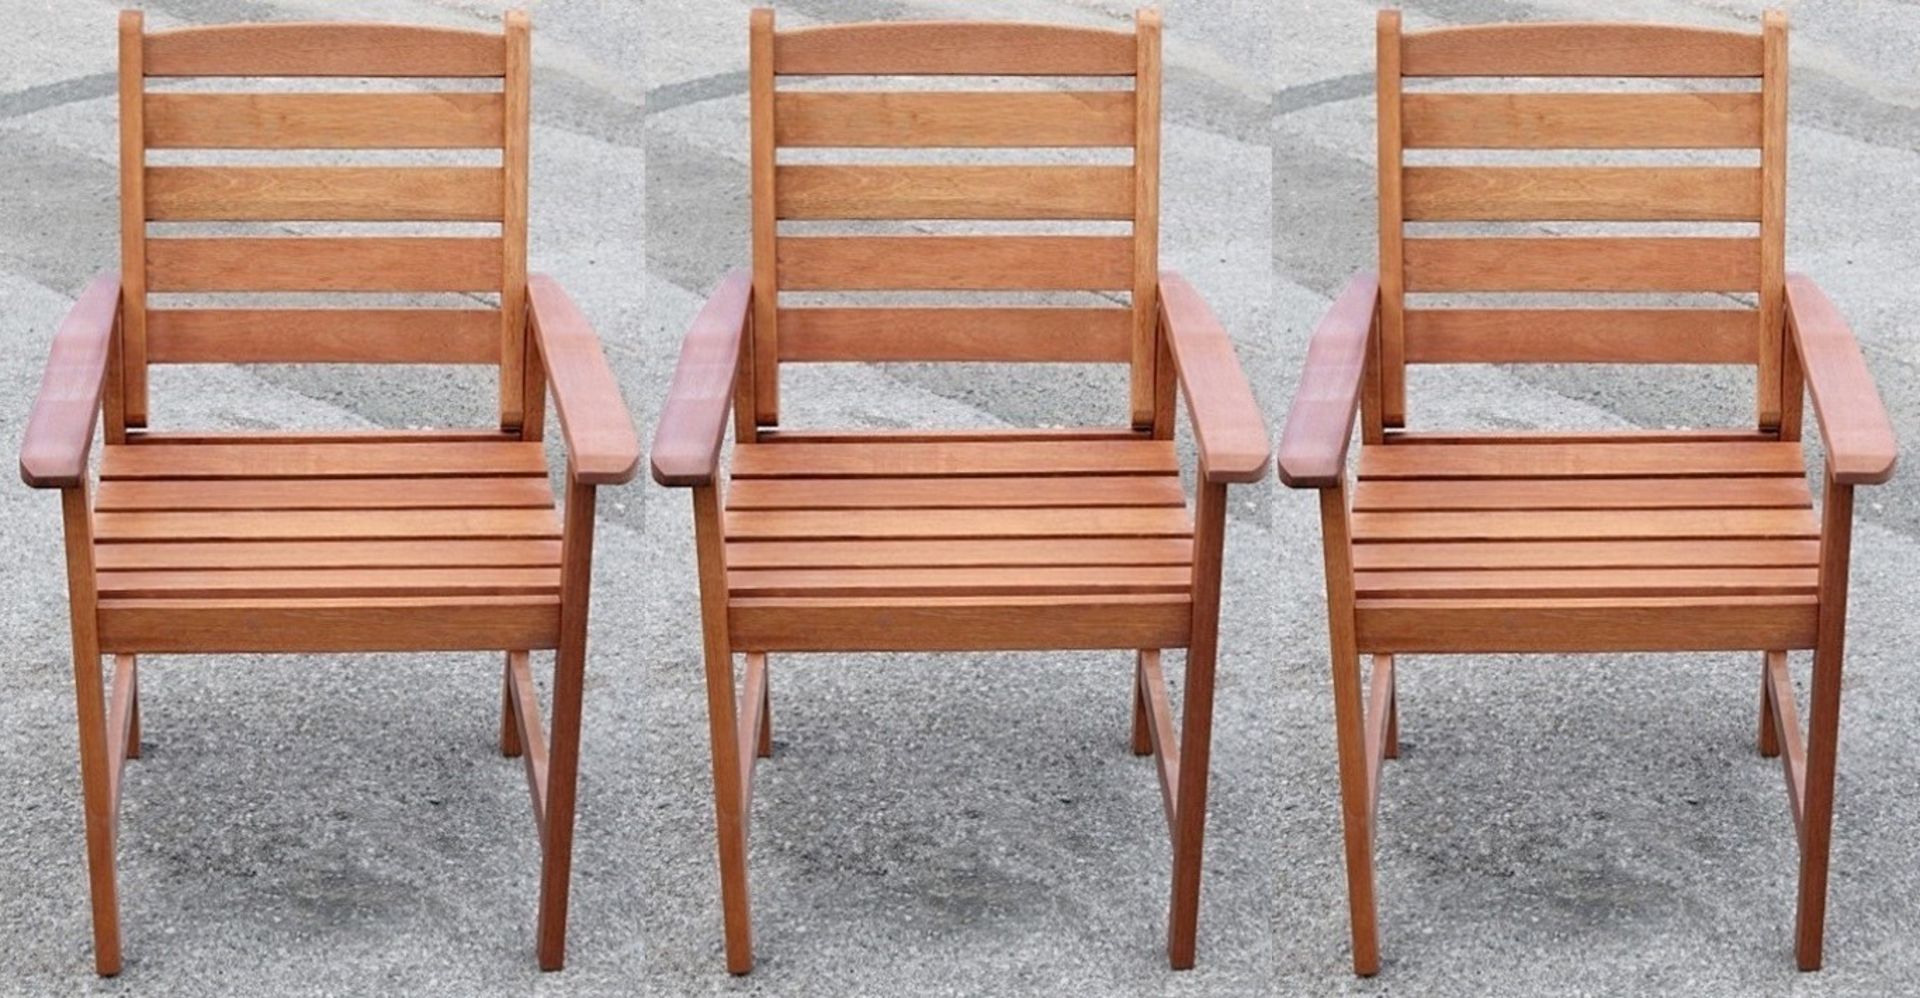 1 x 5-Piece "Macau Nassau" Garden Furniture Set - Includes Bench, Extending Table & 3 x Arm Chairs - - Image 5 of 9